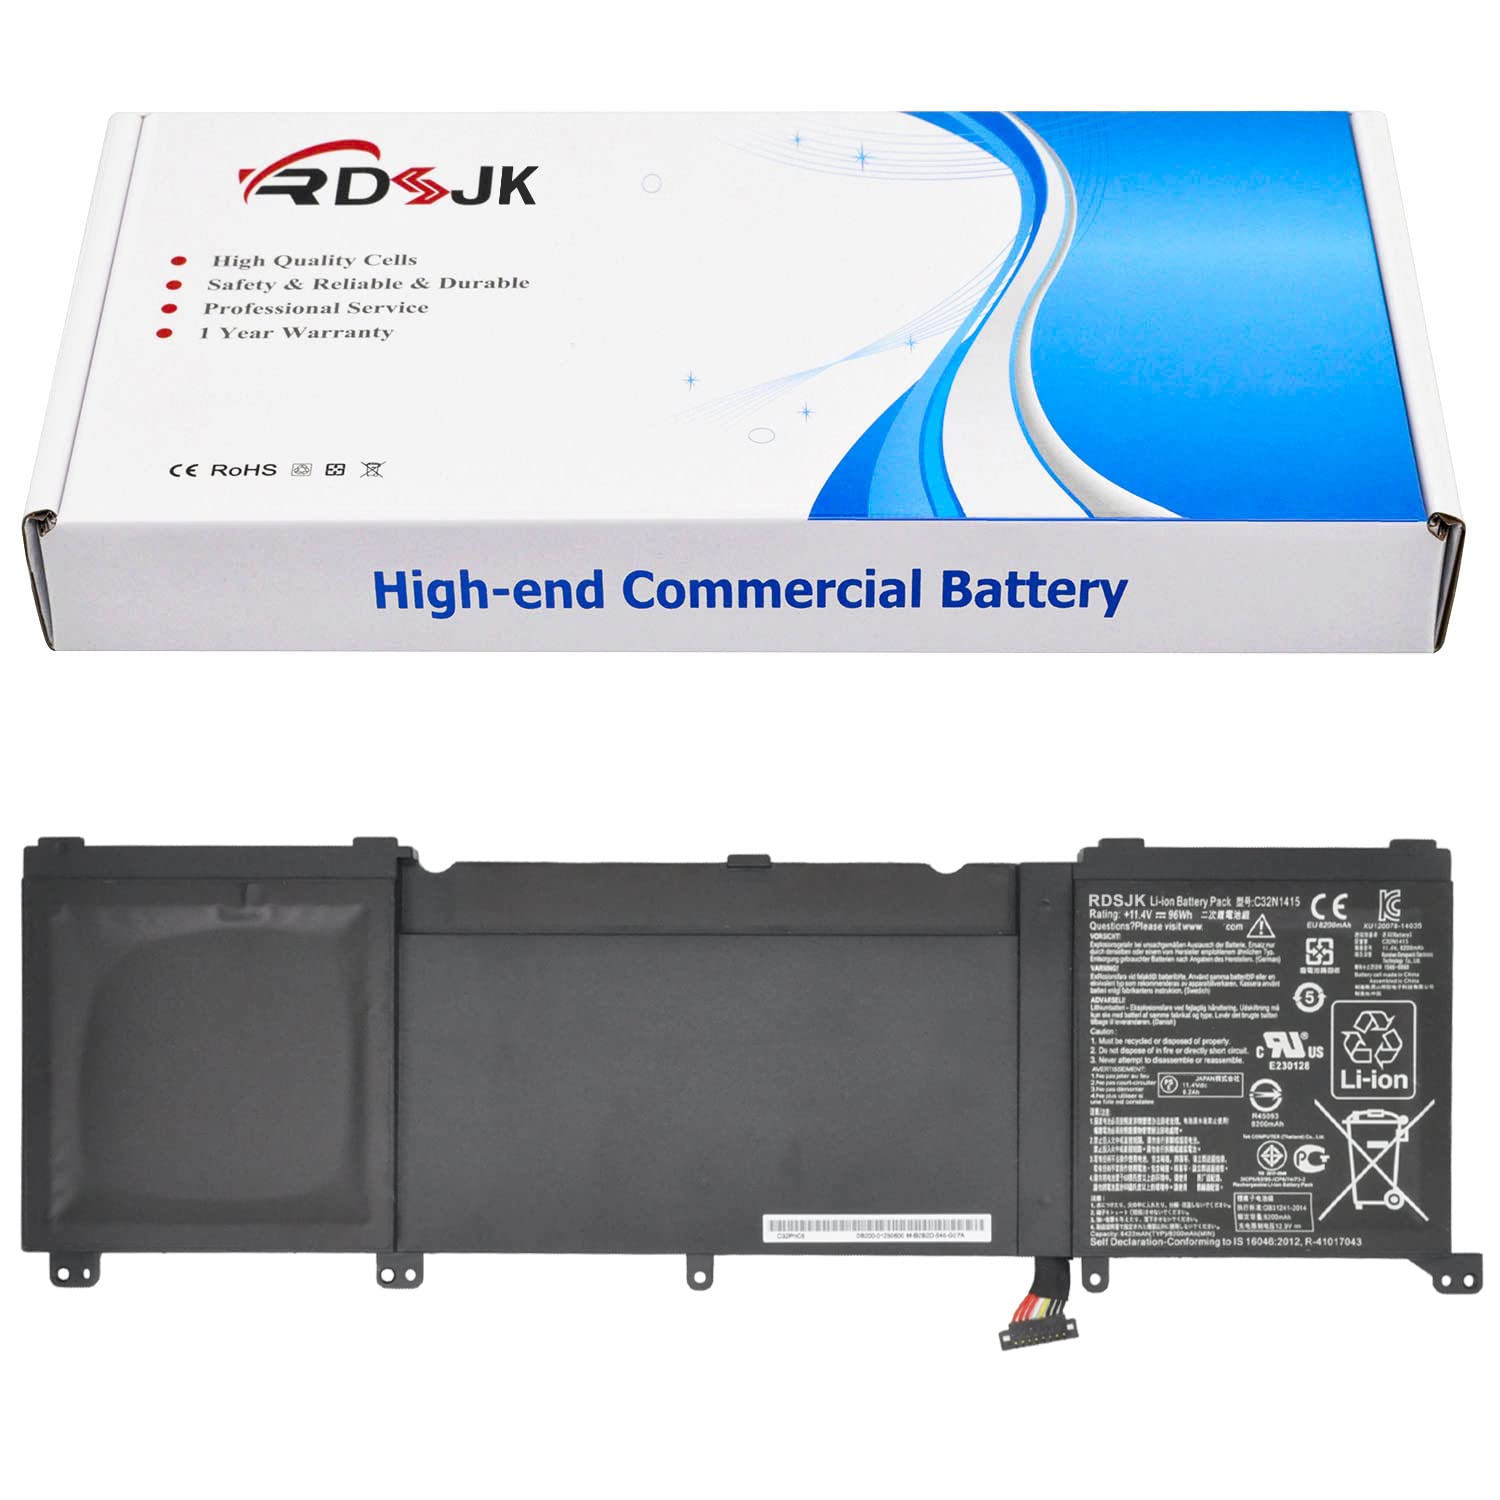 C32N1415 Battery for Asus ZenBook (Pro) UX501J UX501L UX501JW UX501LW UX501JW4720 UX501VW N501 N501VW (ROG) G501 G501VW G501JW Series 0B200-0125000...